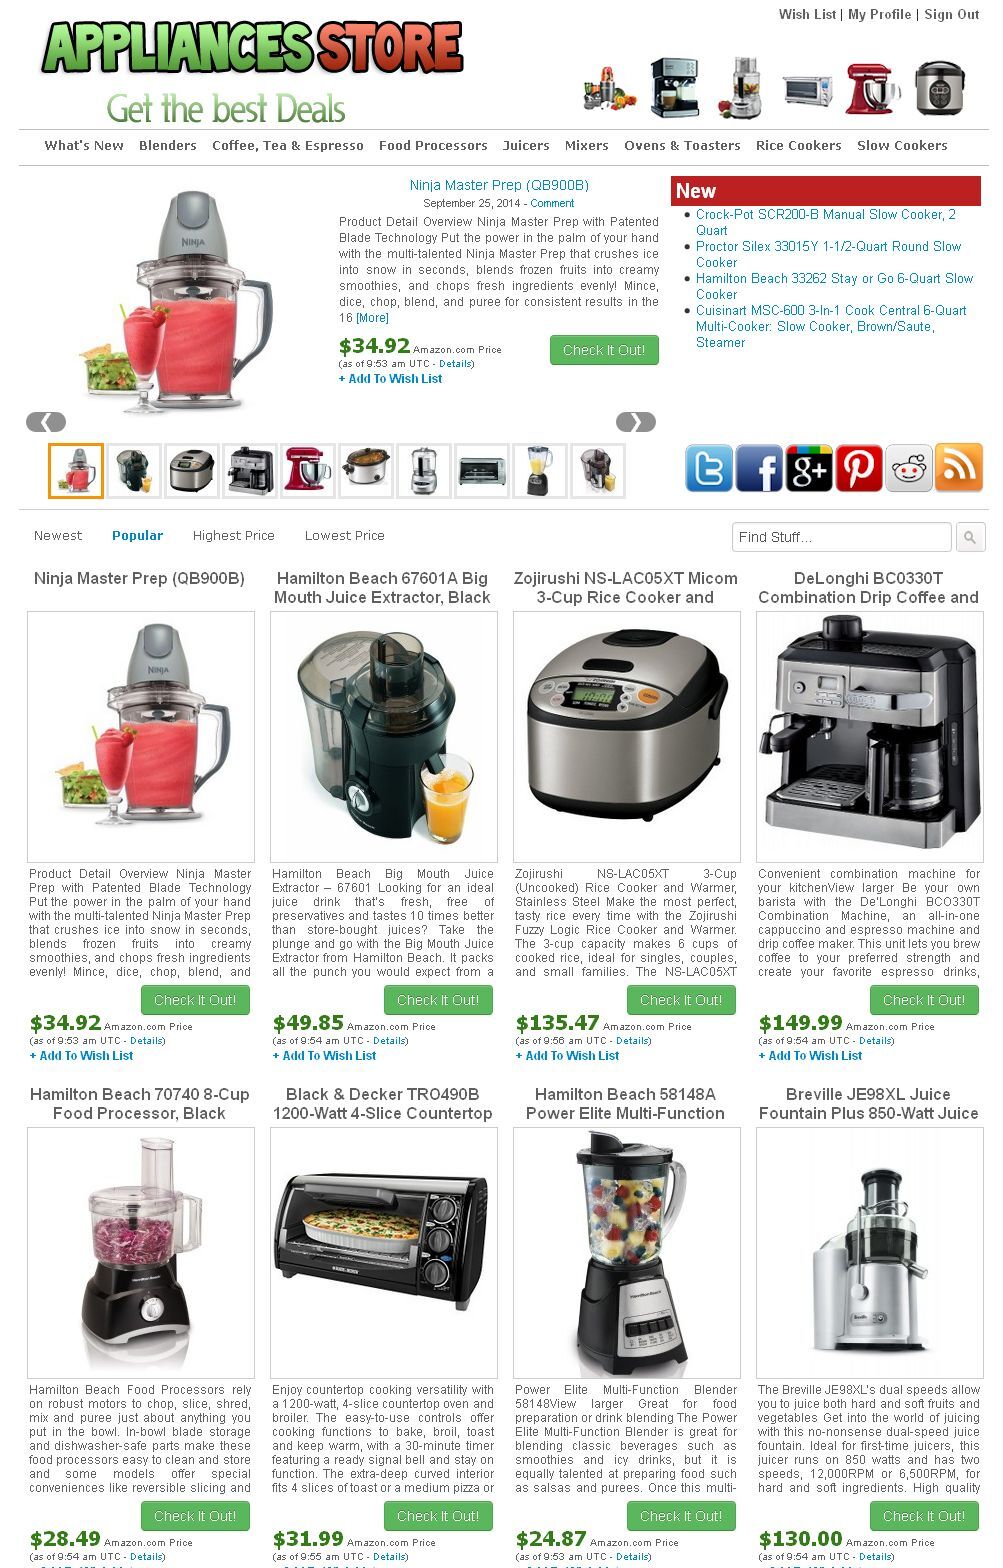 Appliances Store - Amazon, eBay, ClickBank Affiliate Website on Auto Pilot